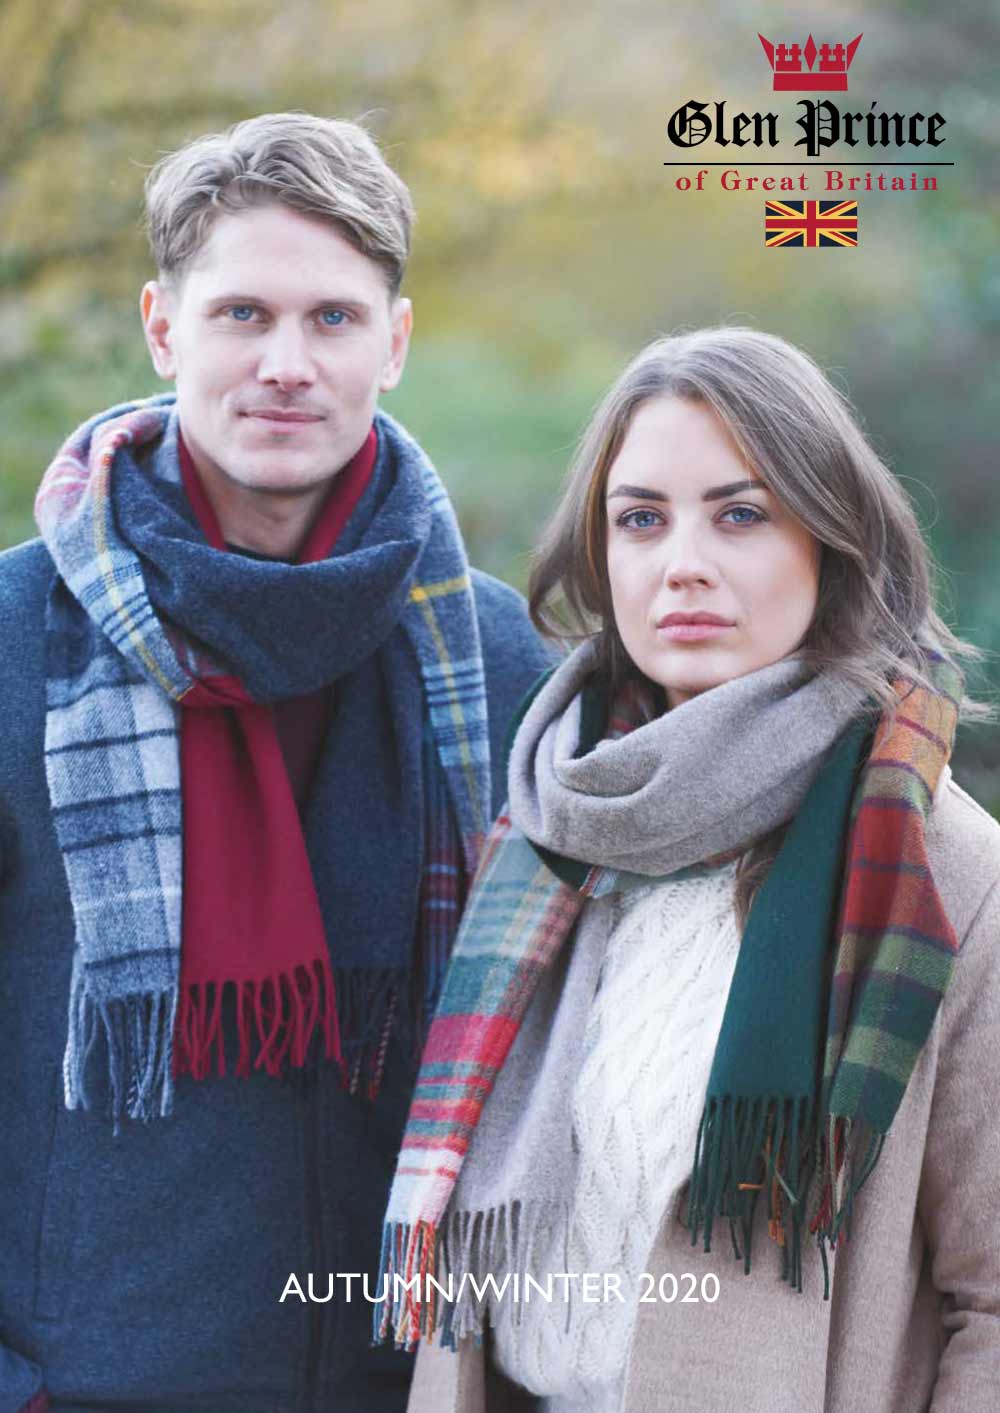 Glen Prince of Great Britain Autumn/ Winter 2020 brochure